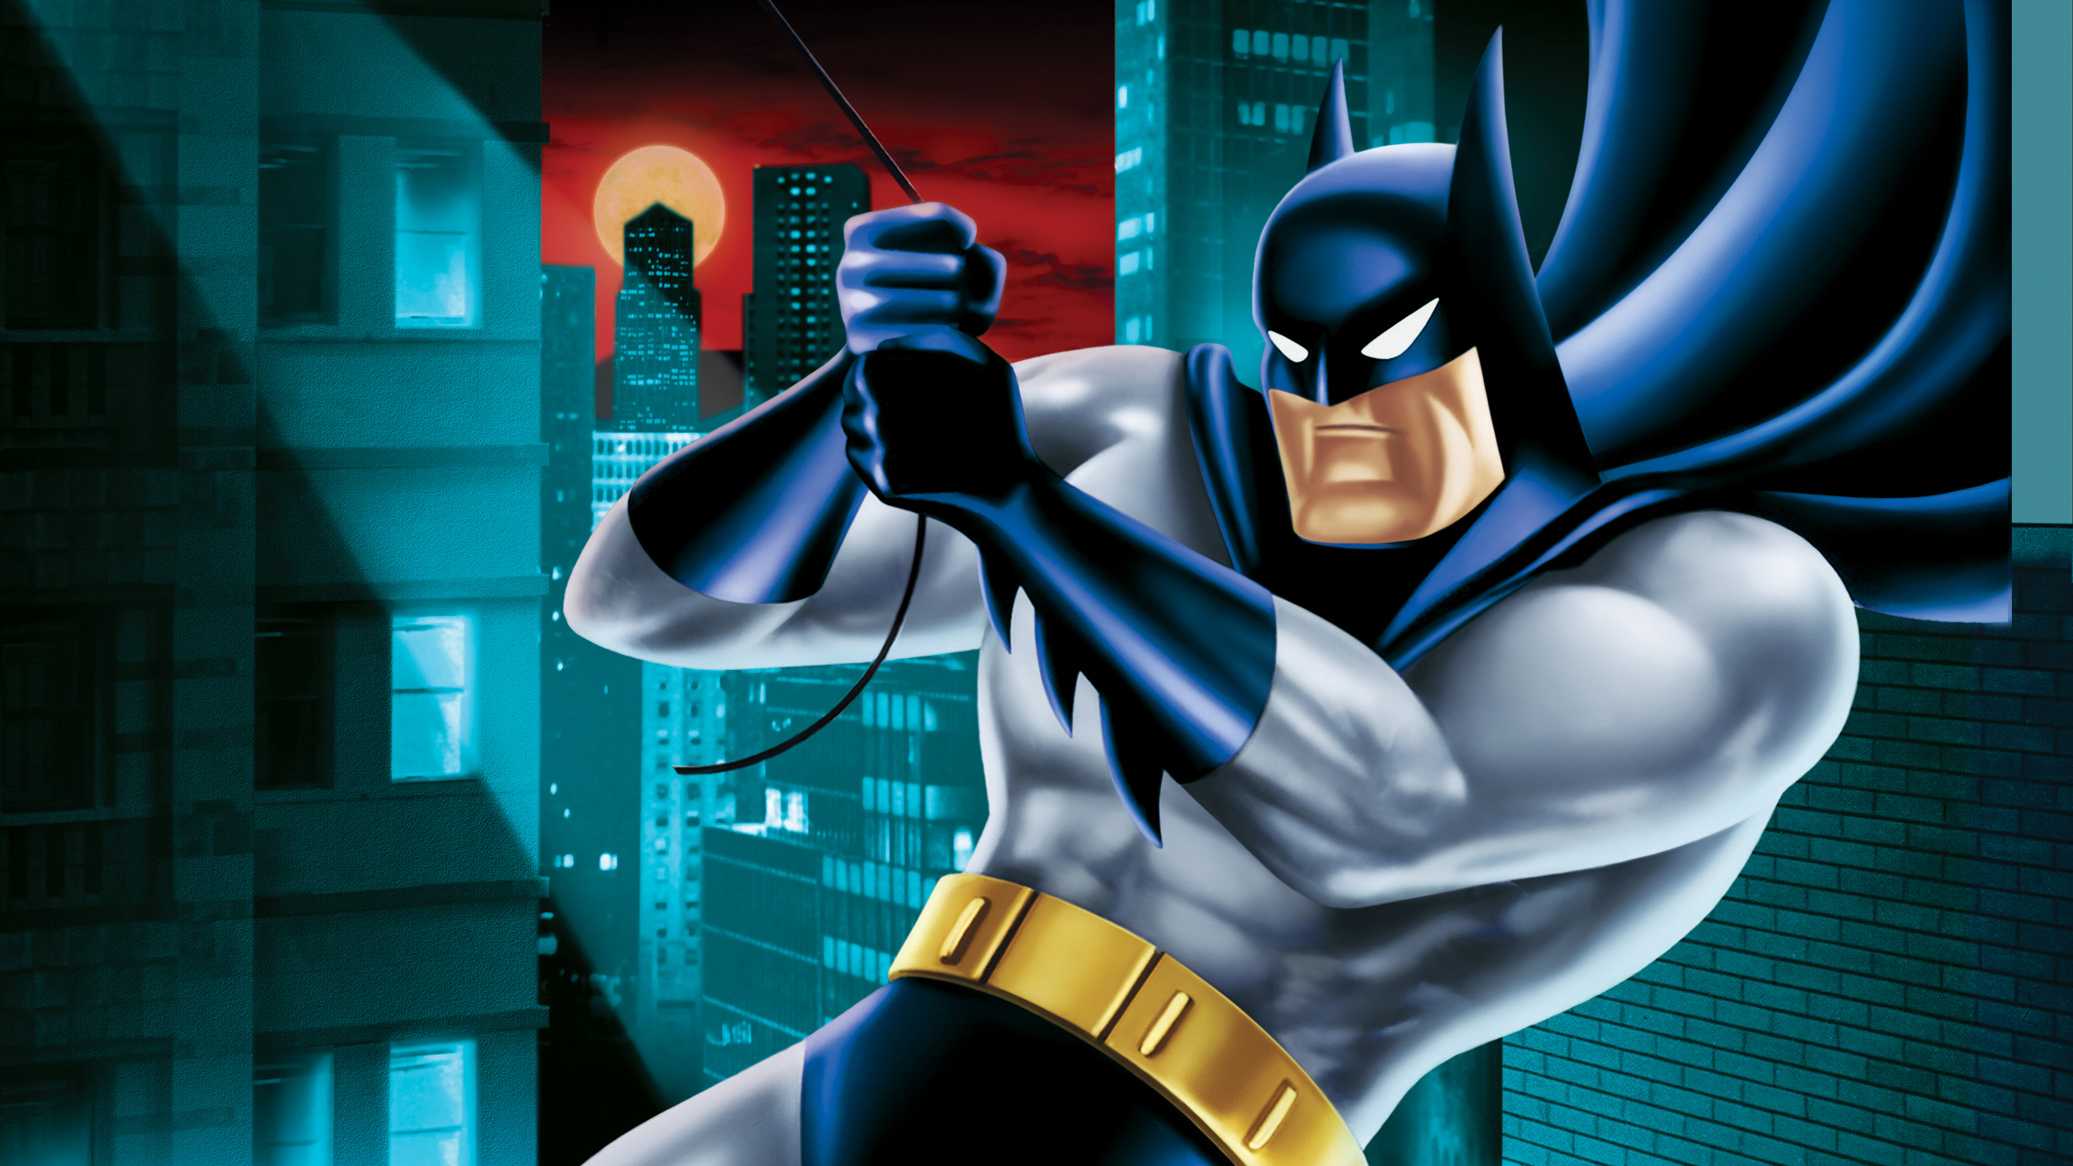 Batman: the animated series